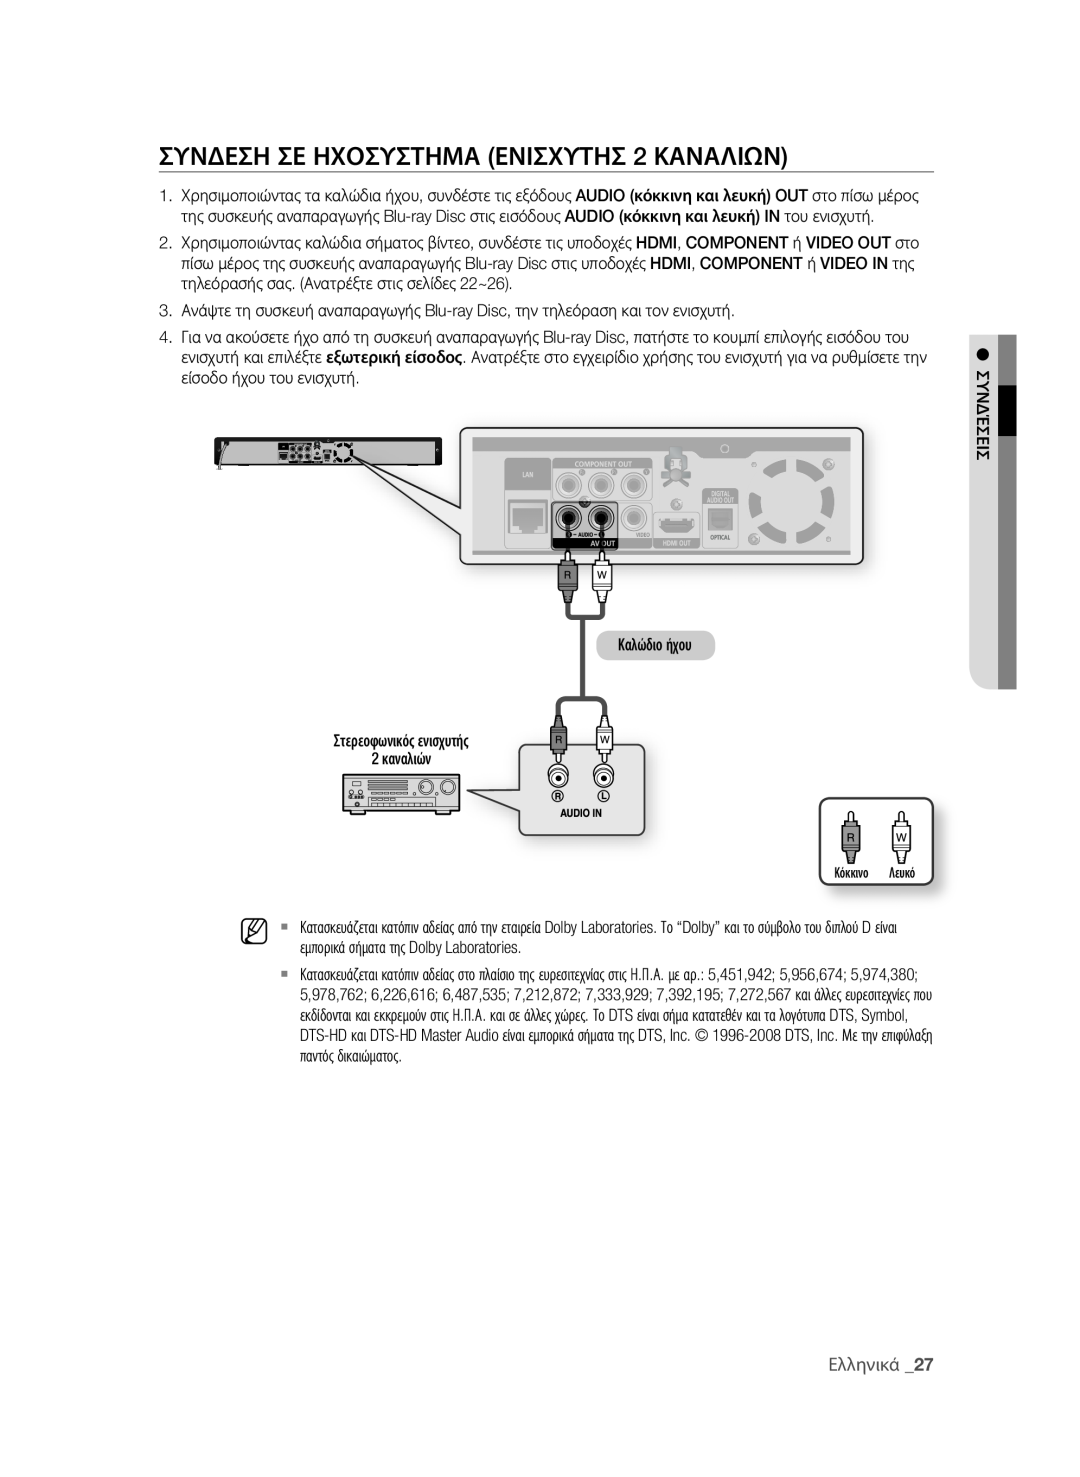 Samsung BD-P1580/EDC manual σΥΝδεση σε ηΧοσΥσΤηΜΑ εΝισΧΥΤησ 2 ΚΑΝΑΛιΩΝ, Ελληνικά 2, Λευκό 